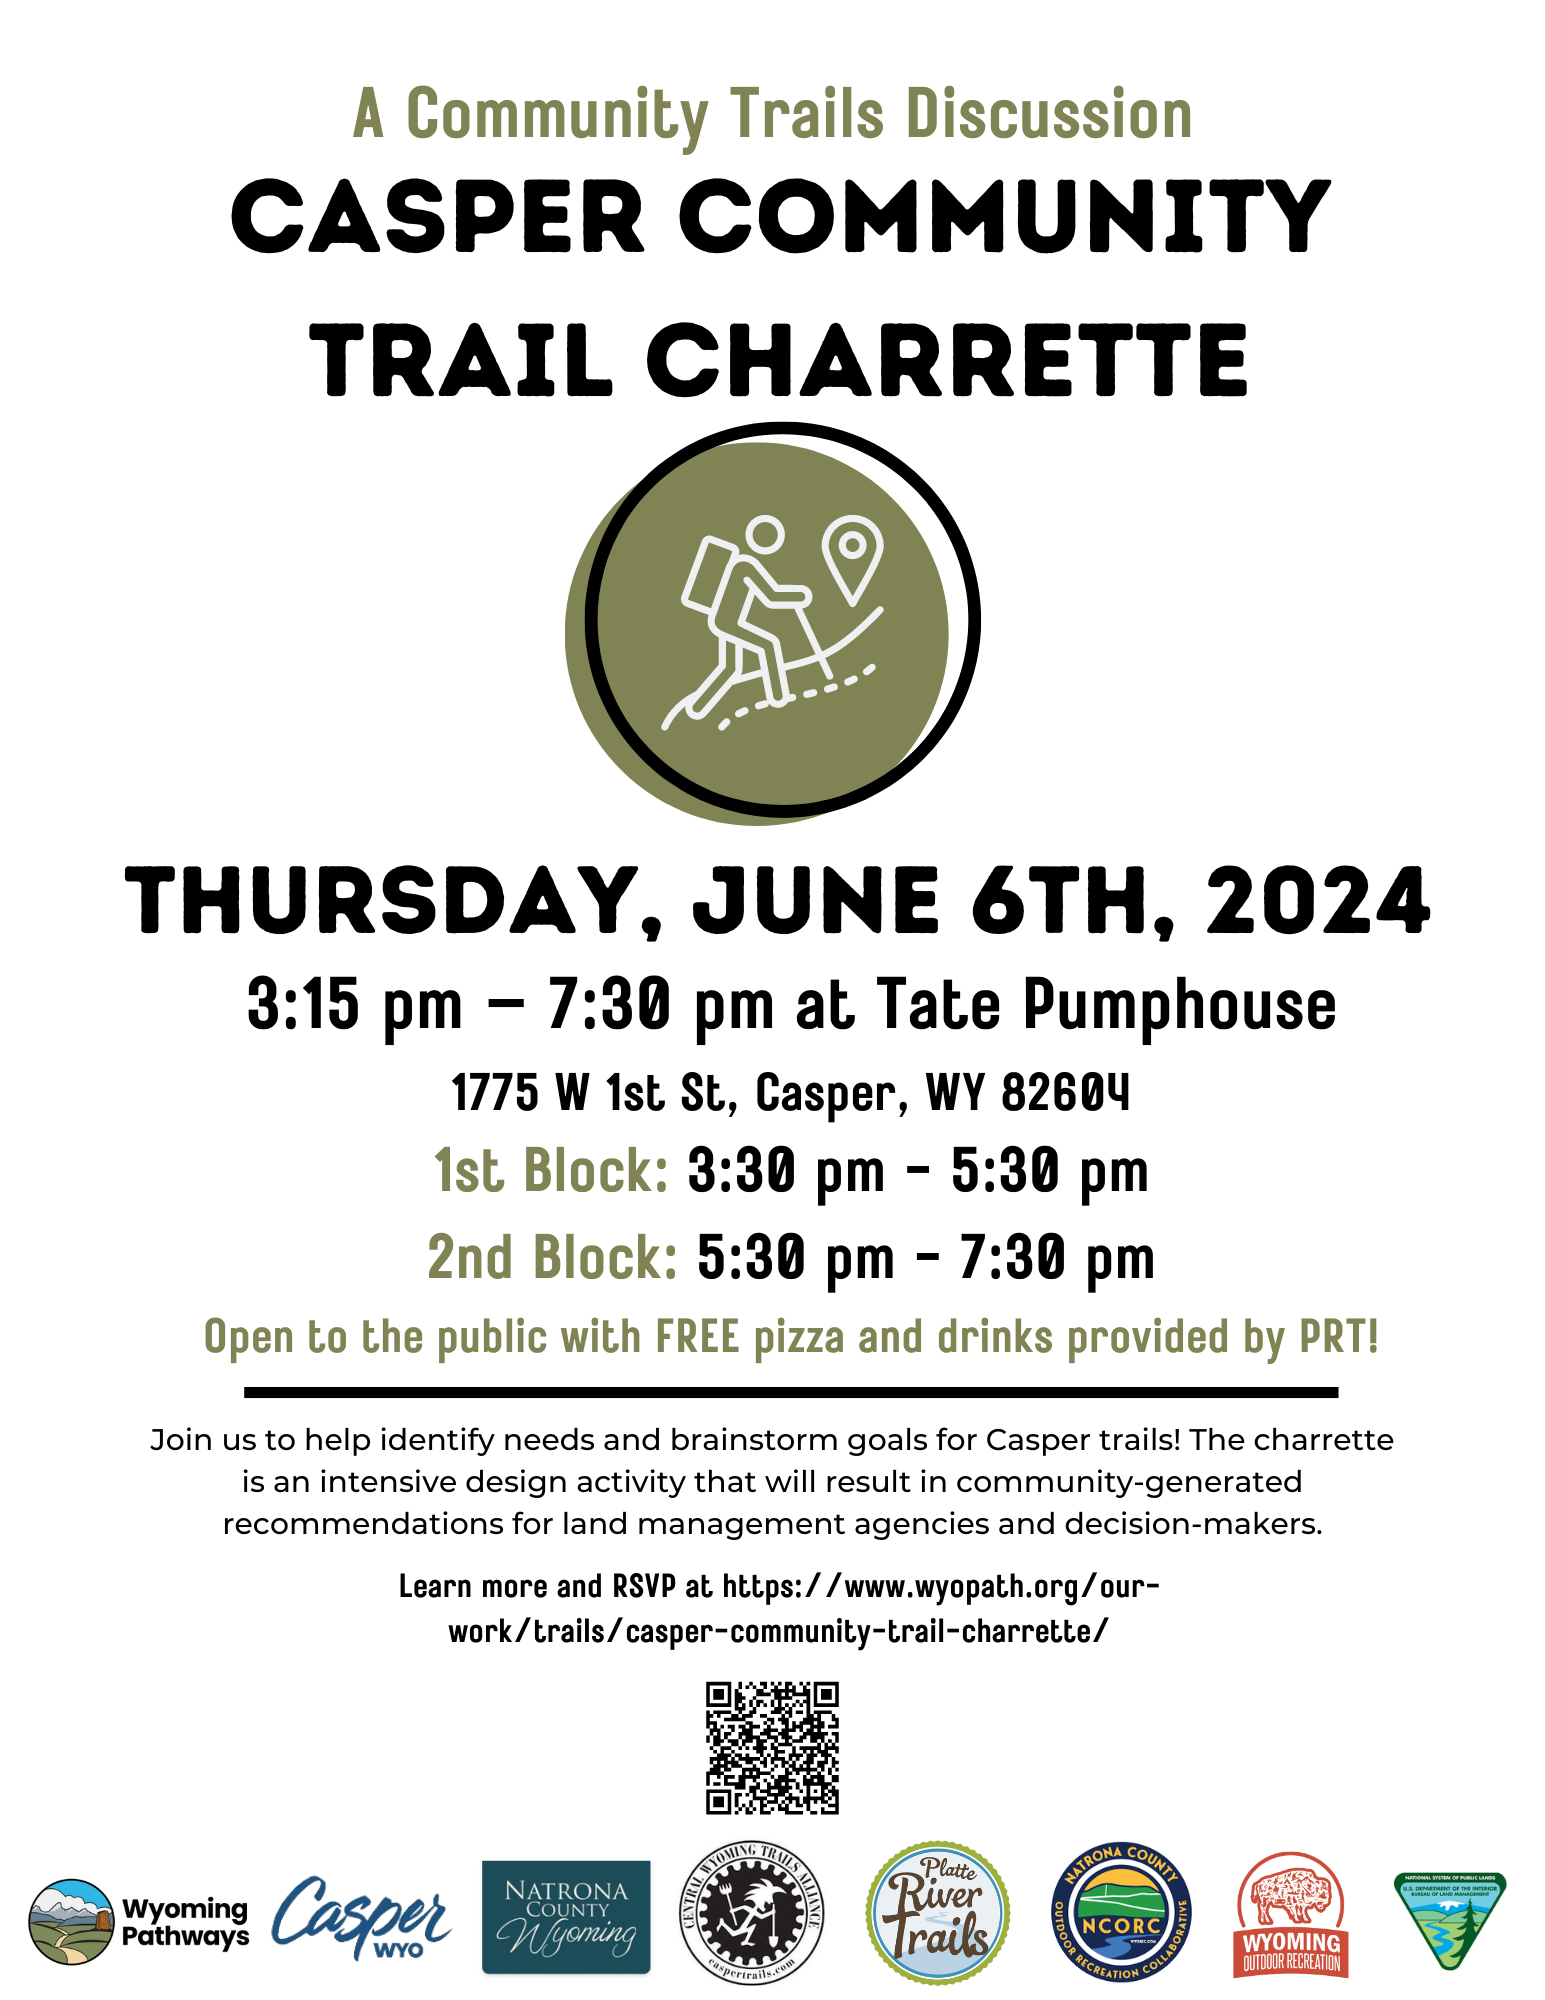 A flyer for the casper community trail charrette